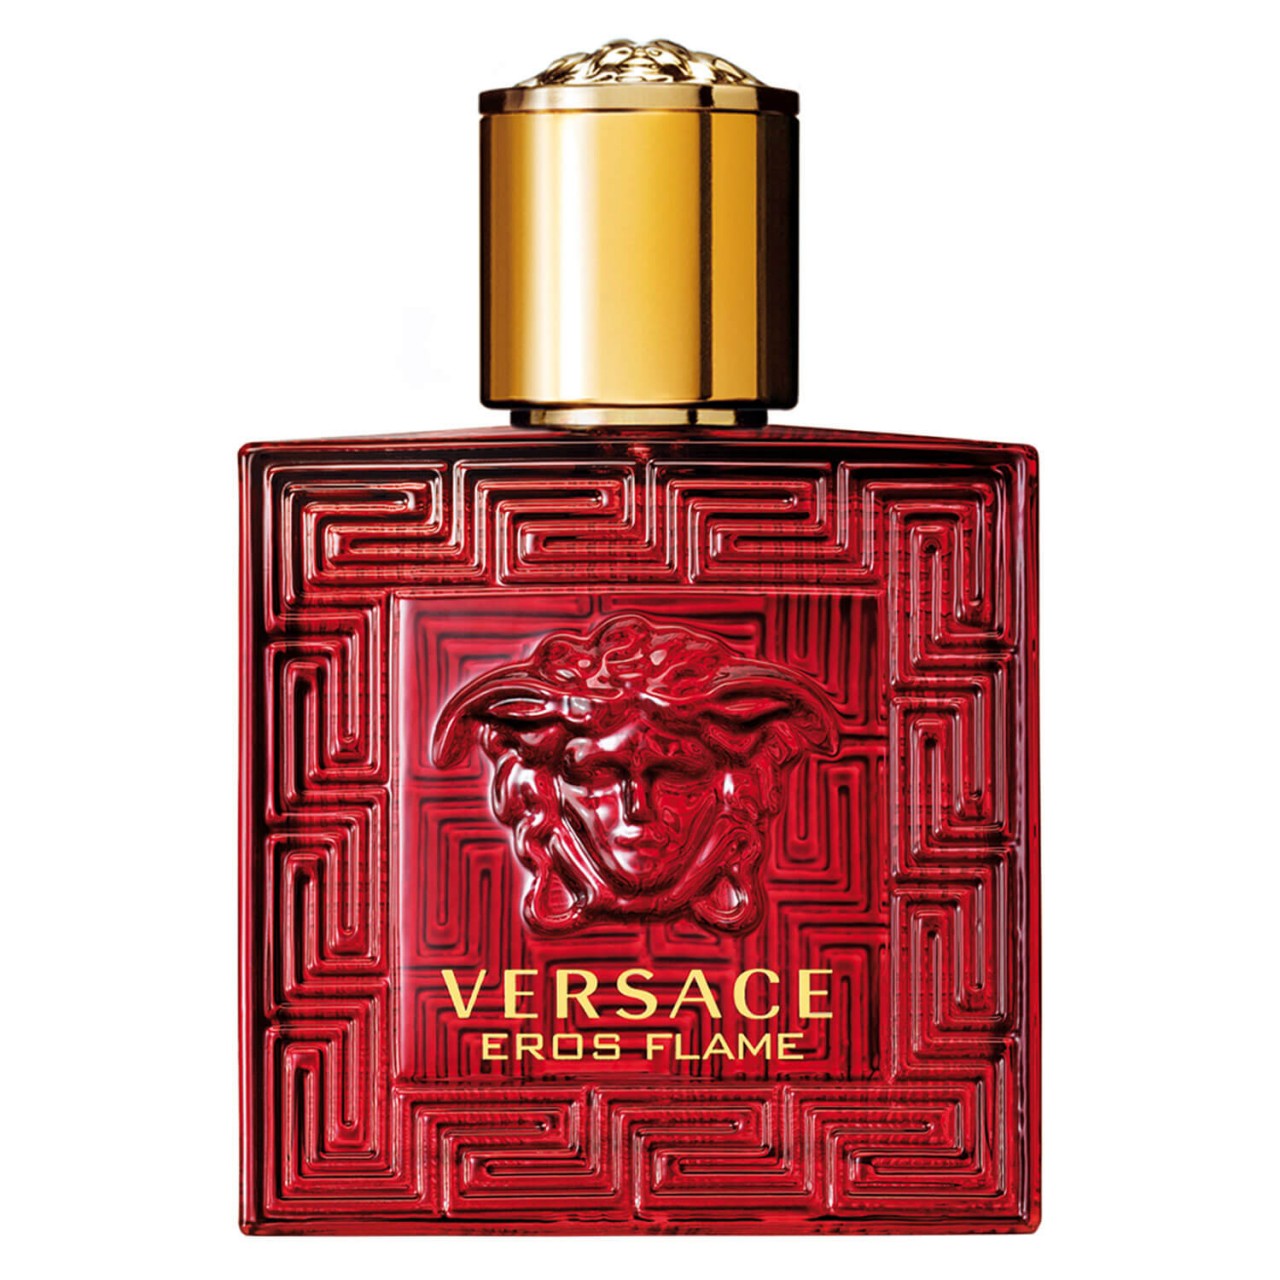 Versace Eros - Flame Eau de Parfum Natural Spray von Versace